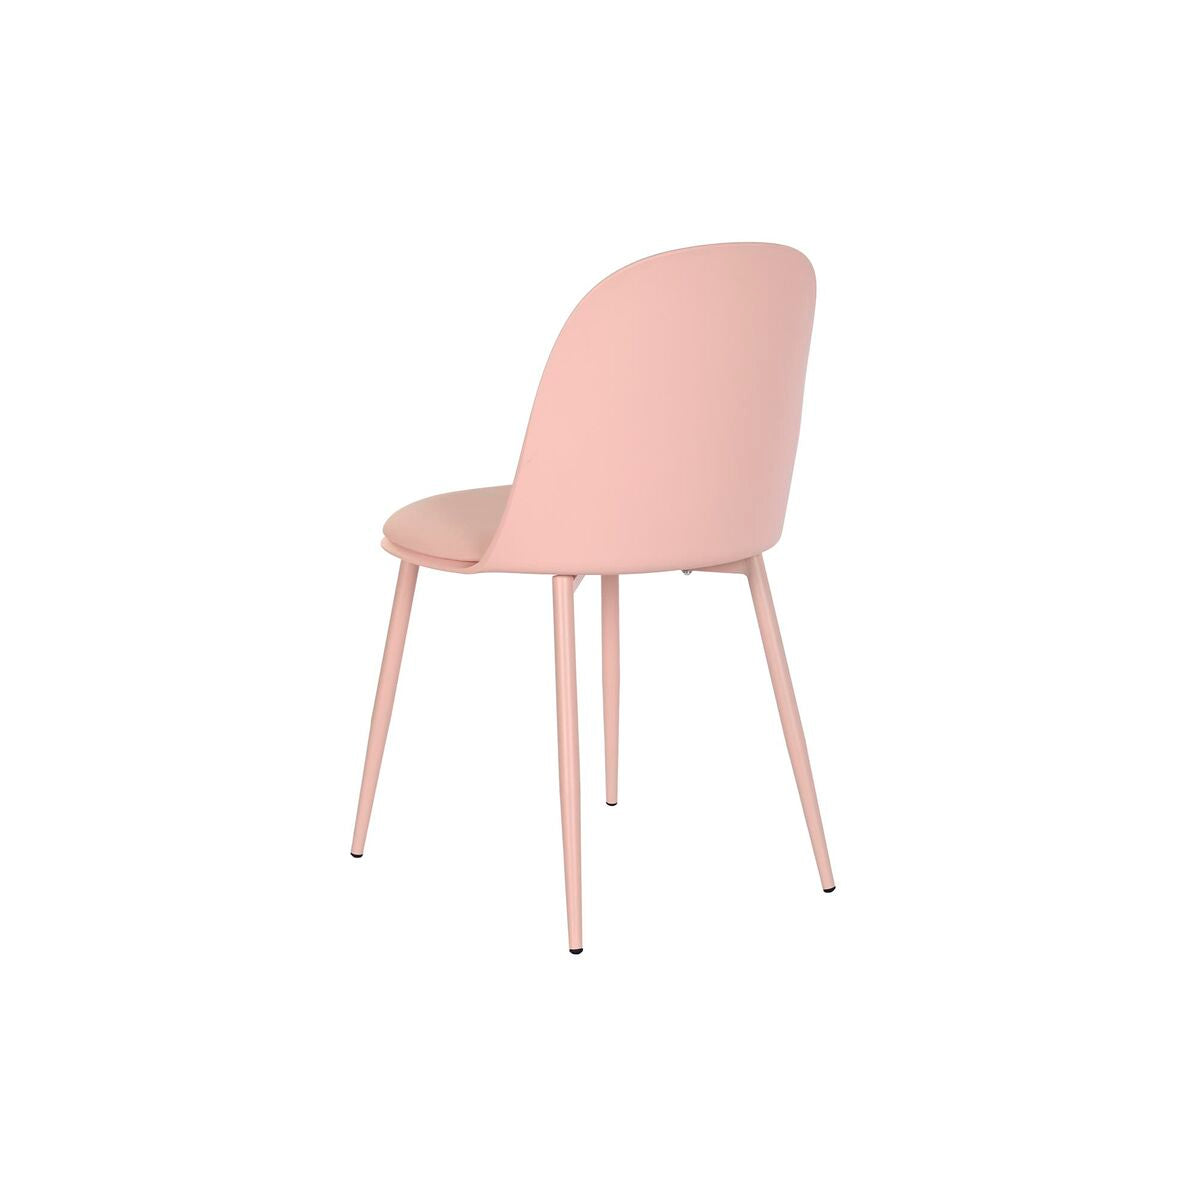 Pink Dining Chair (45 x 46 x 81 cm)